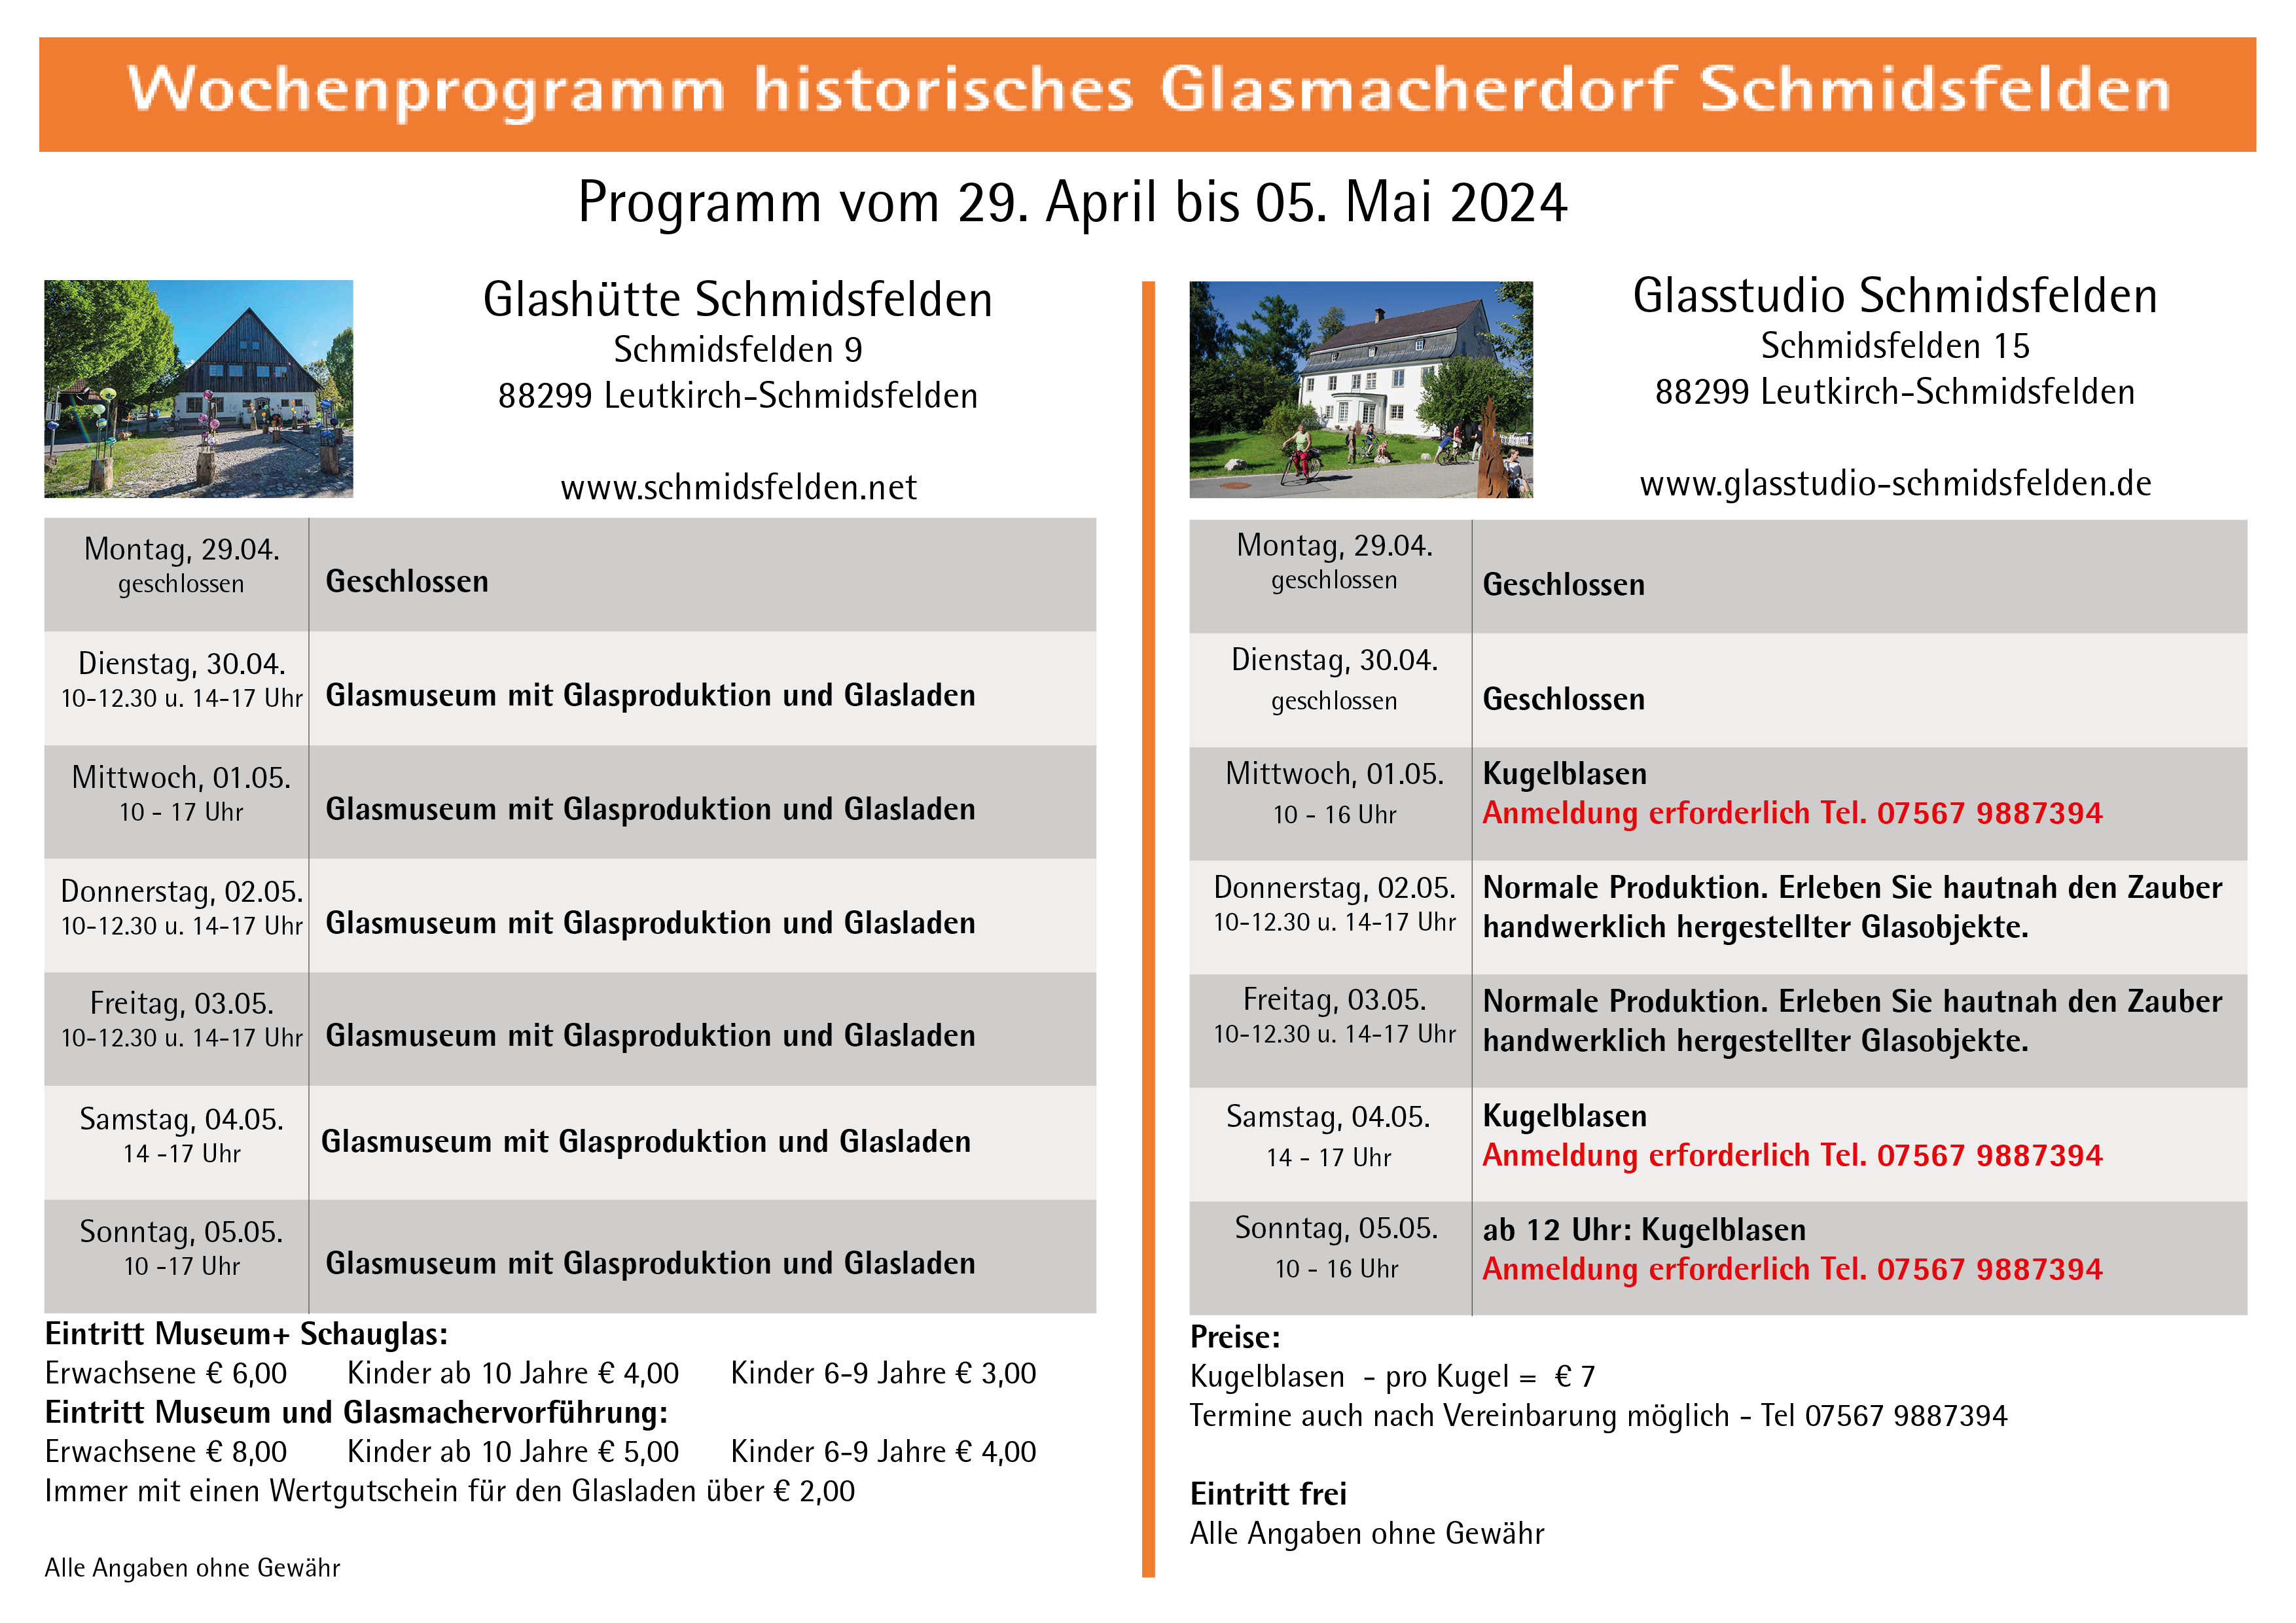 Wochenprogramm Schmidsfelden 29.04. - 05.05.2024